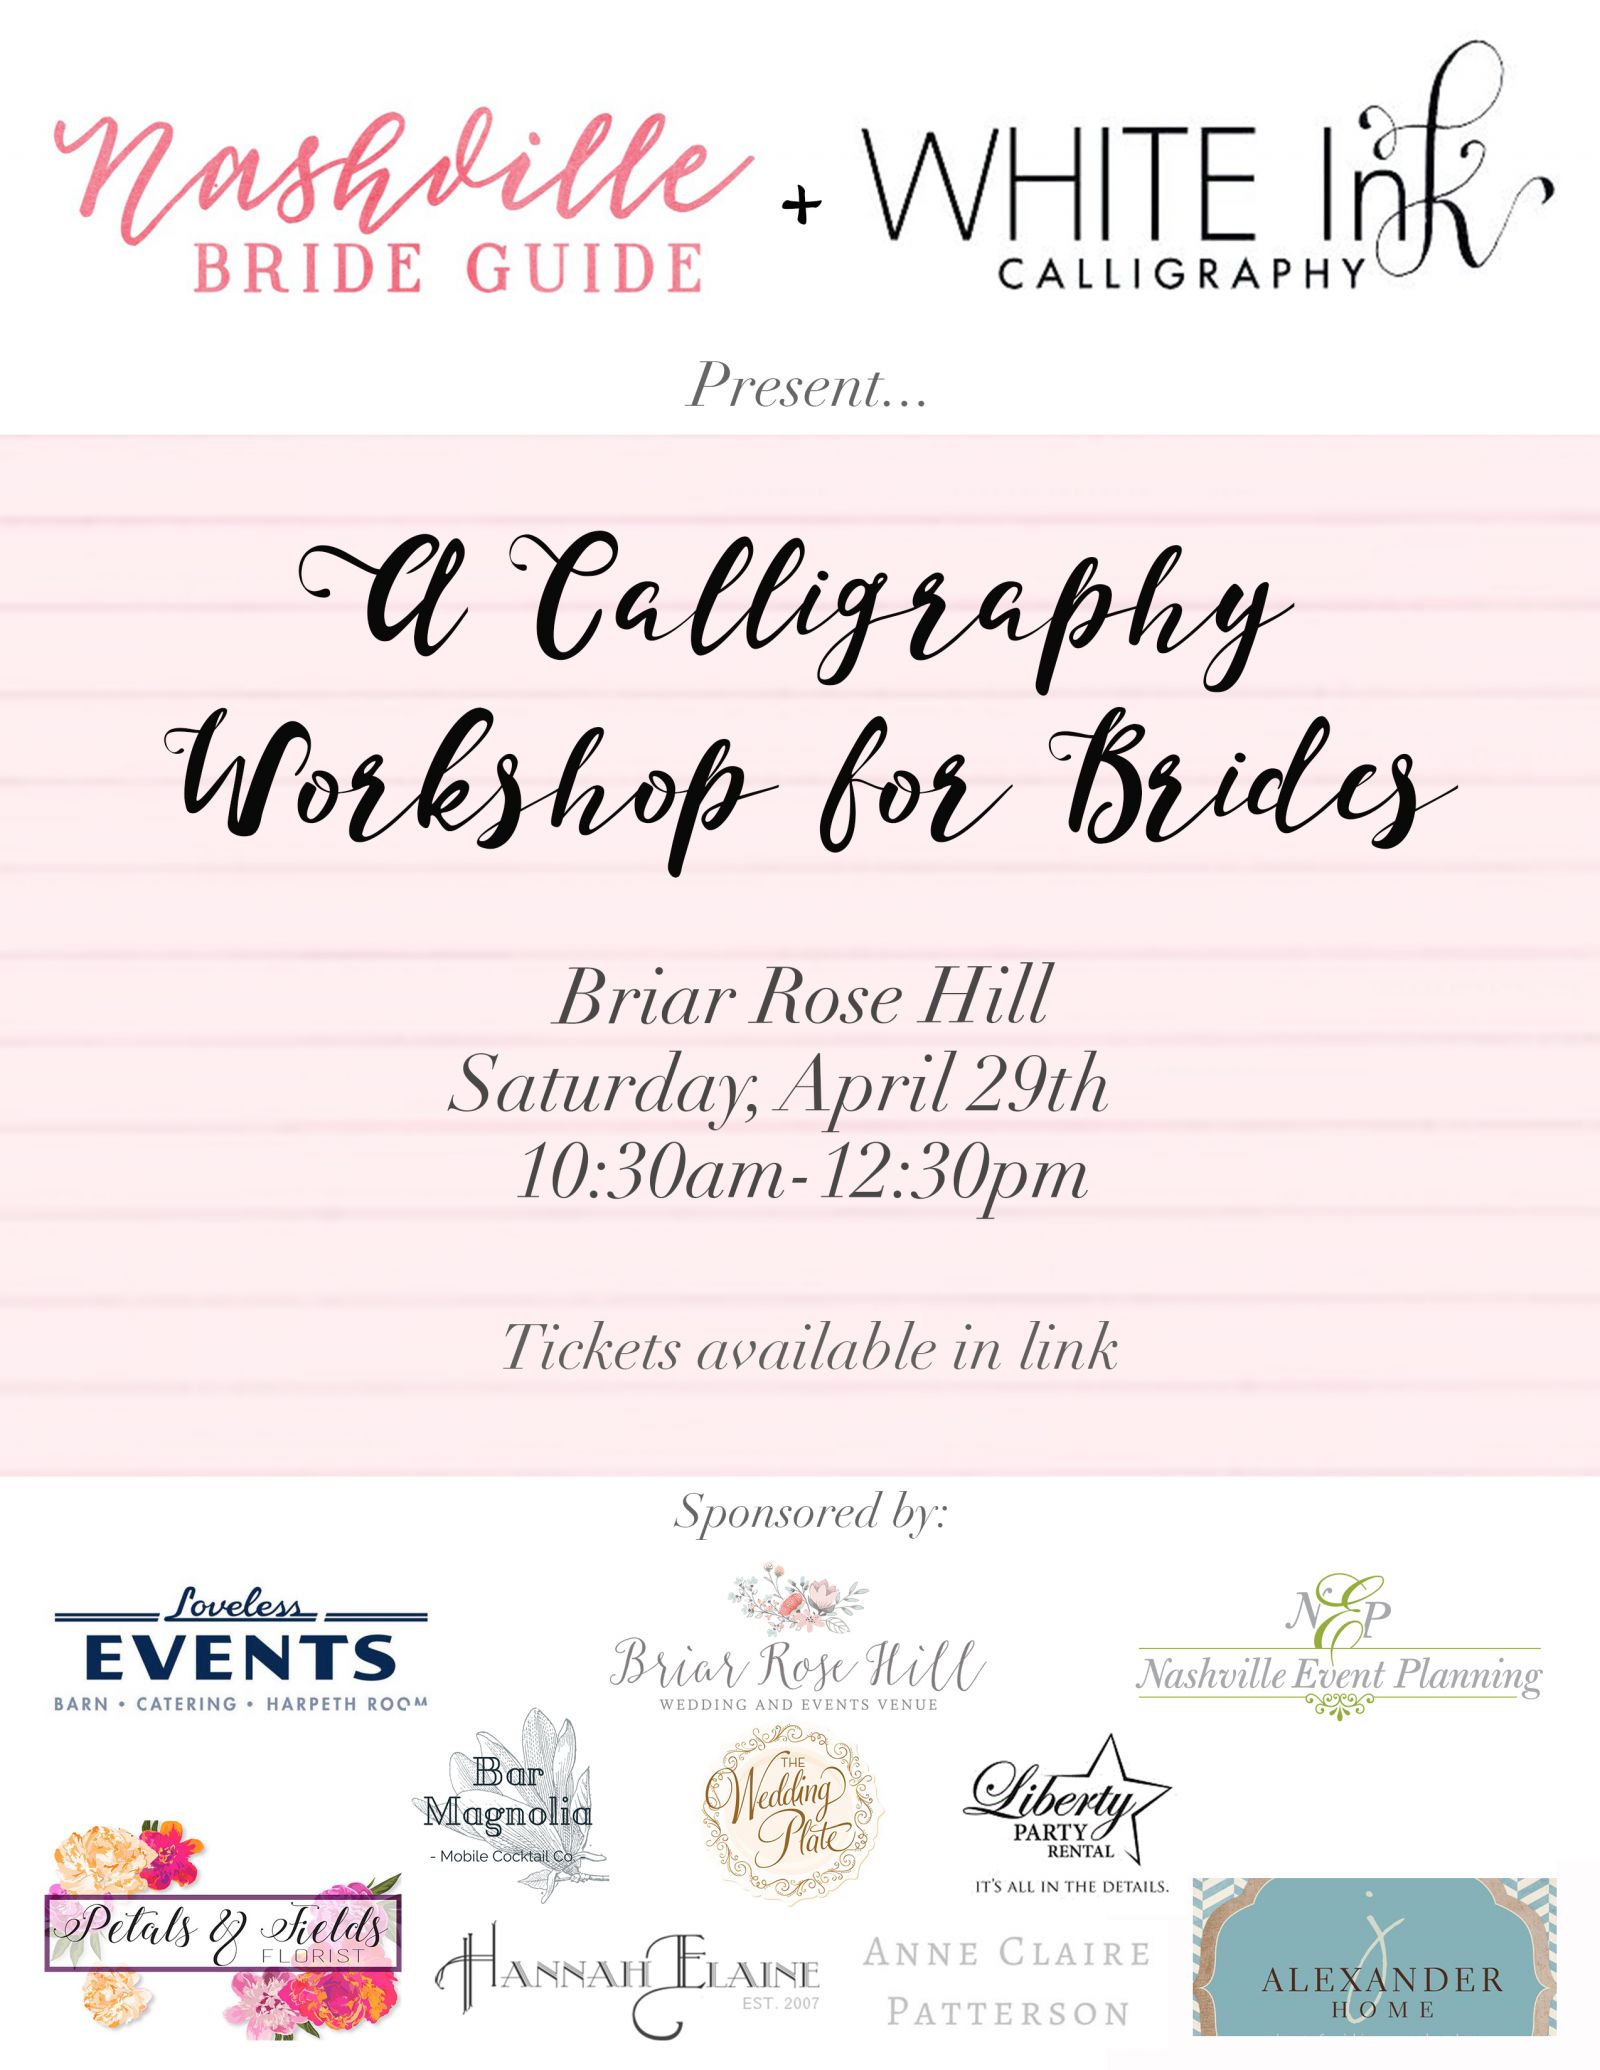 A Calligraphy Workshop for Brides on April 29th by Nashville Bride Guide